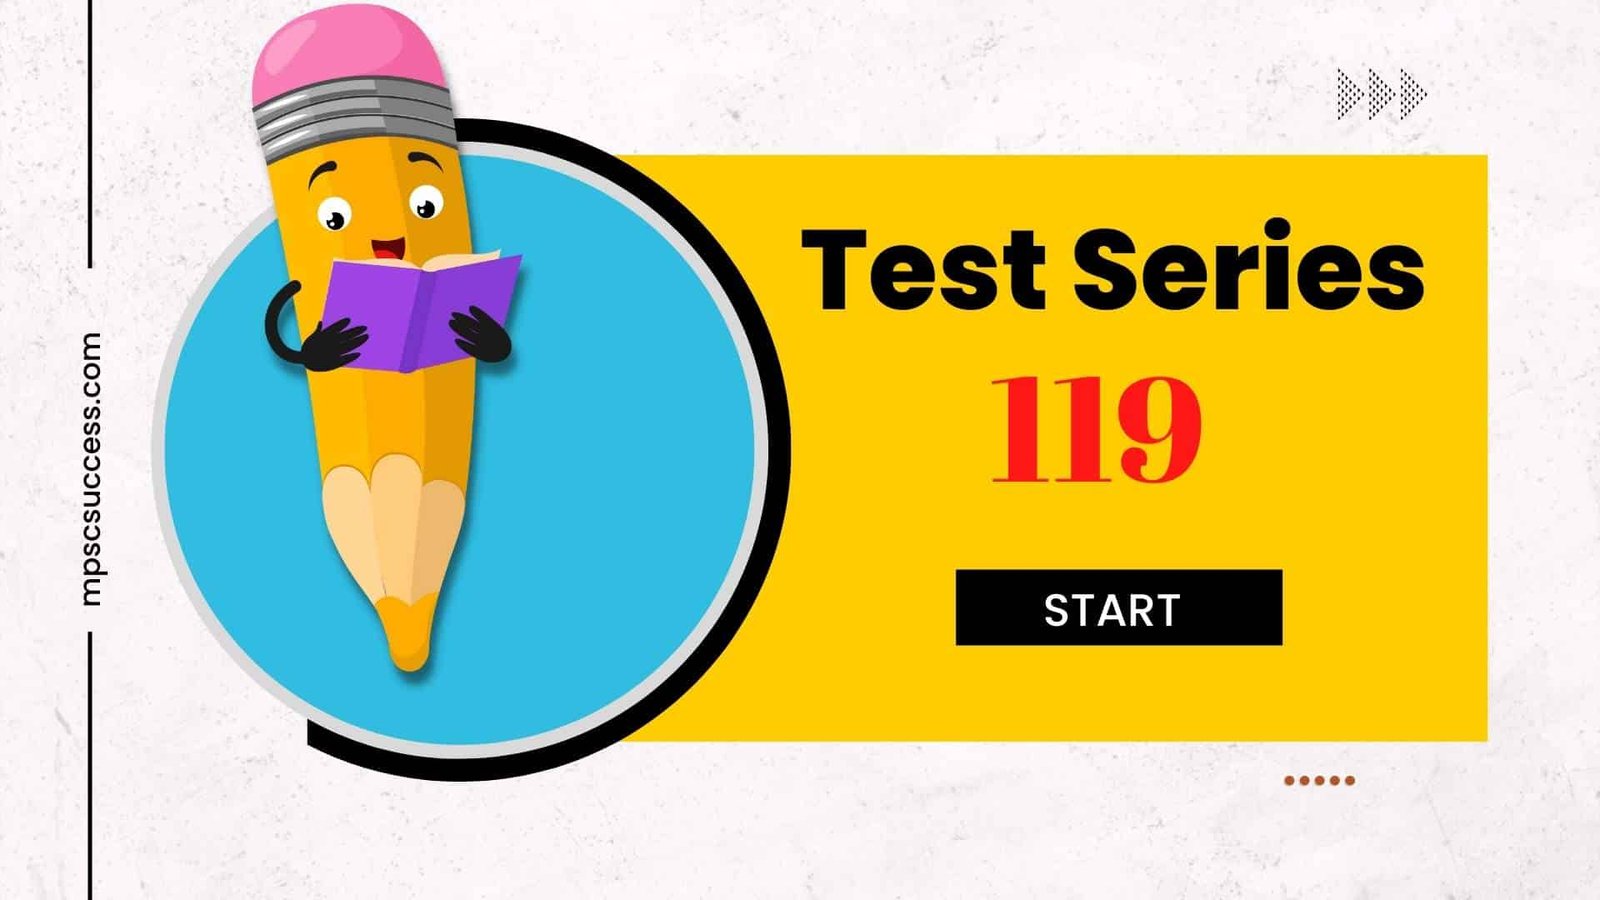 Test Series 119